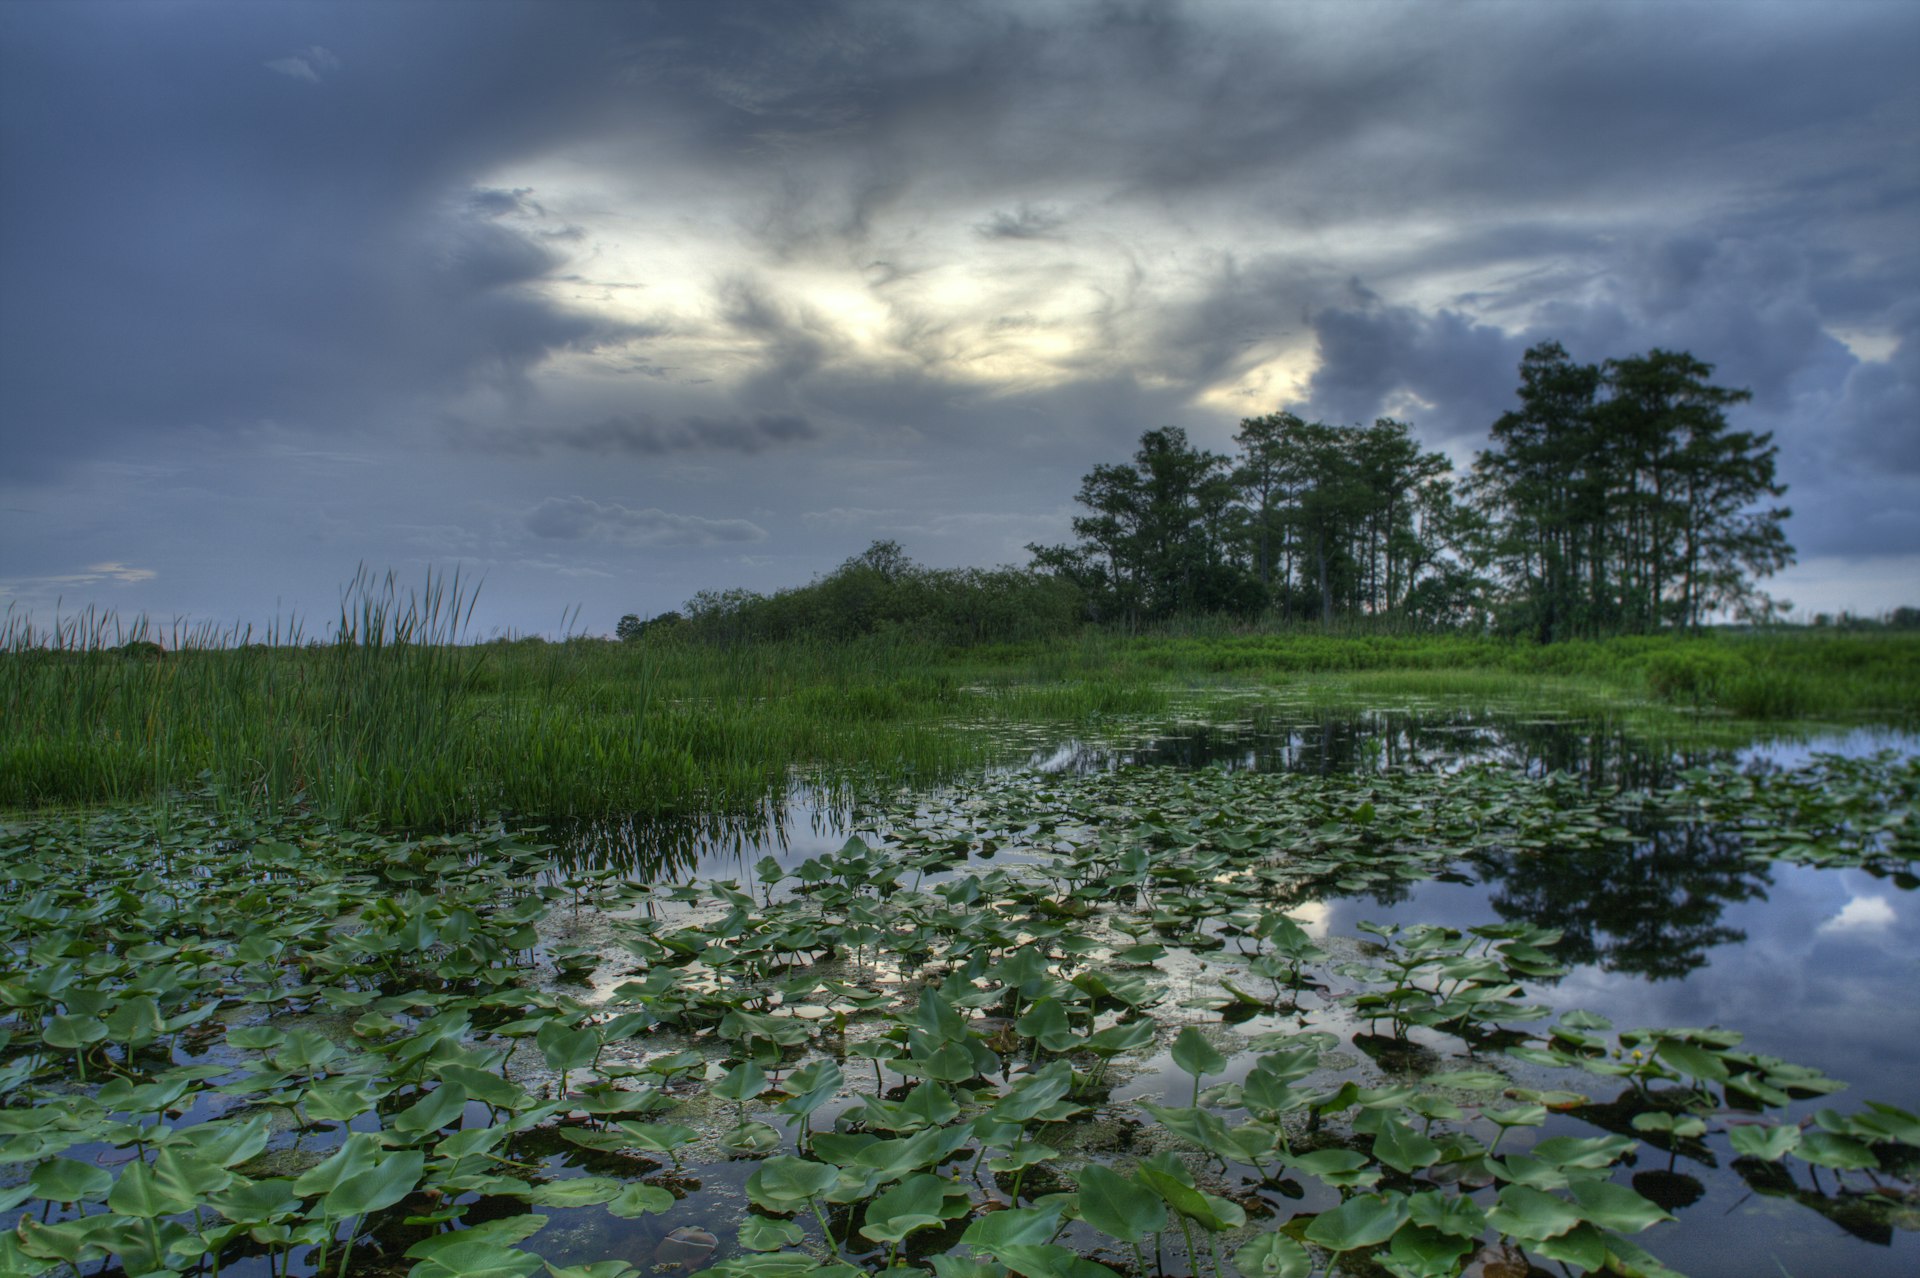 Dark storm clouds over the swampy Everglades